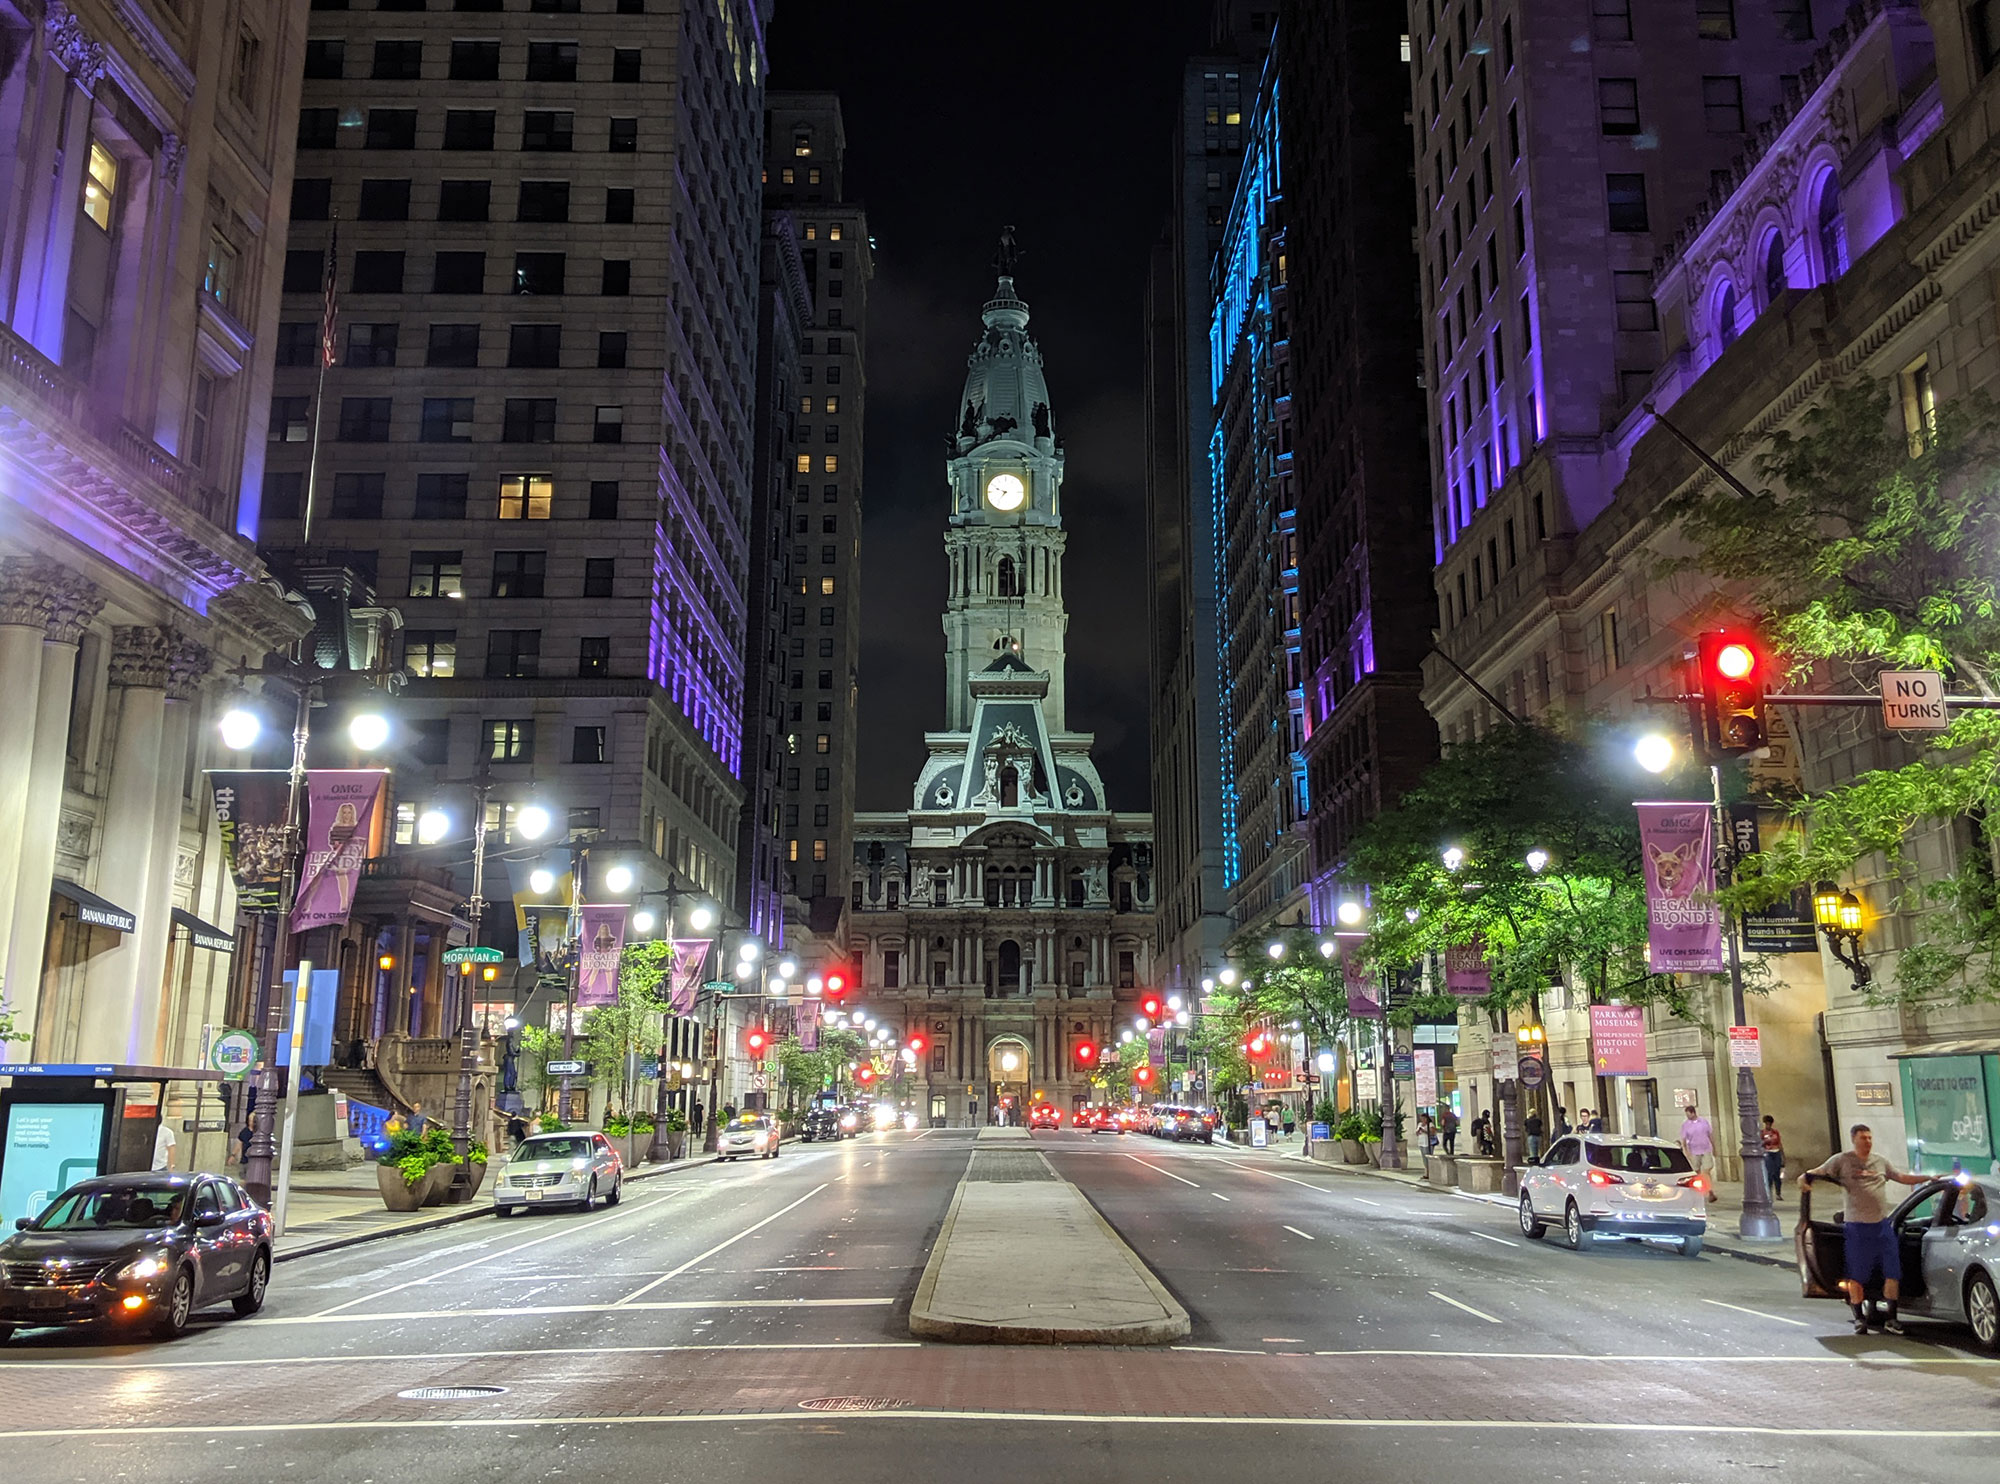 Philadelphia City Hall at night.